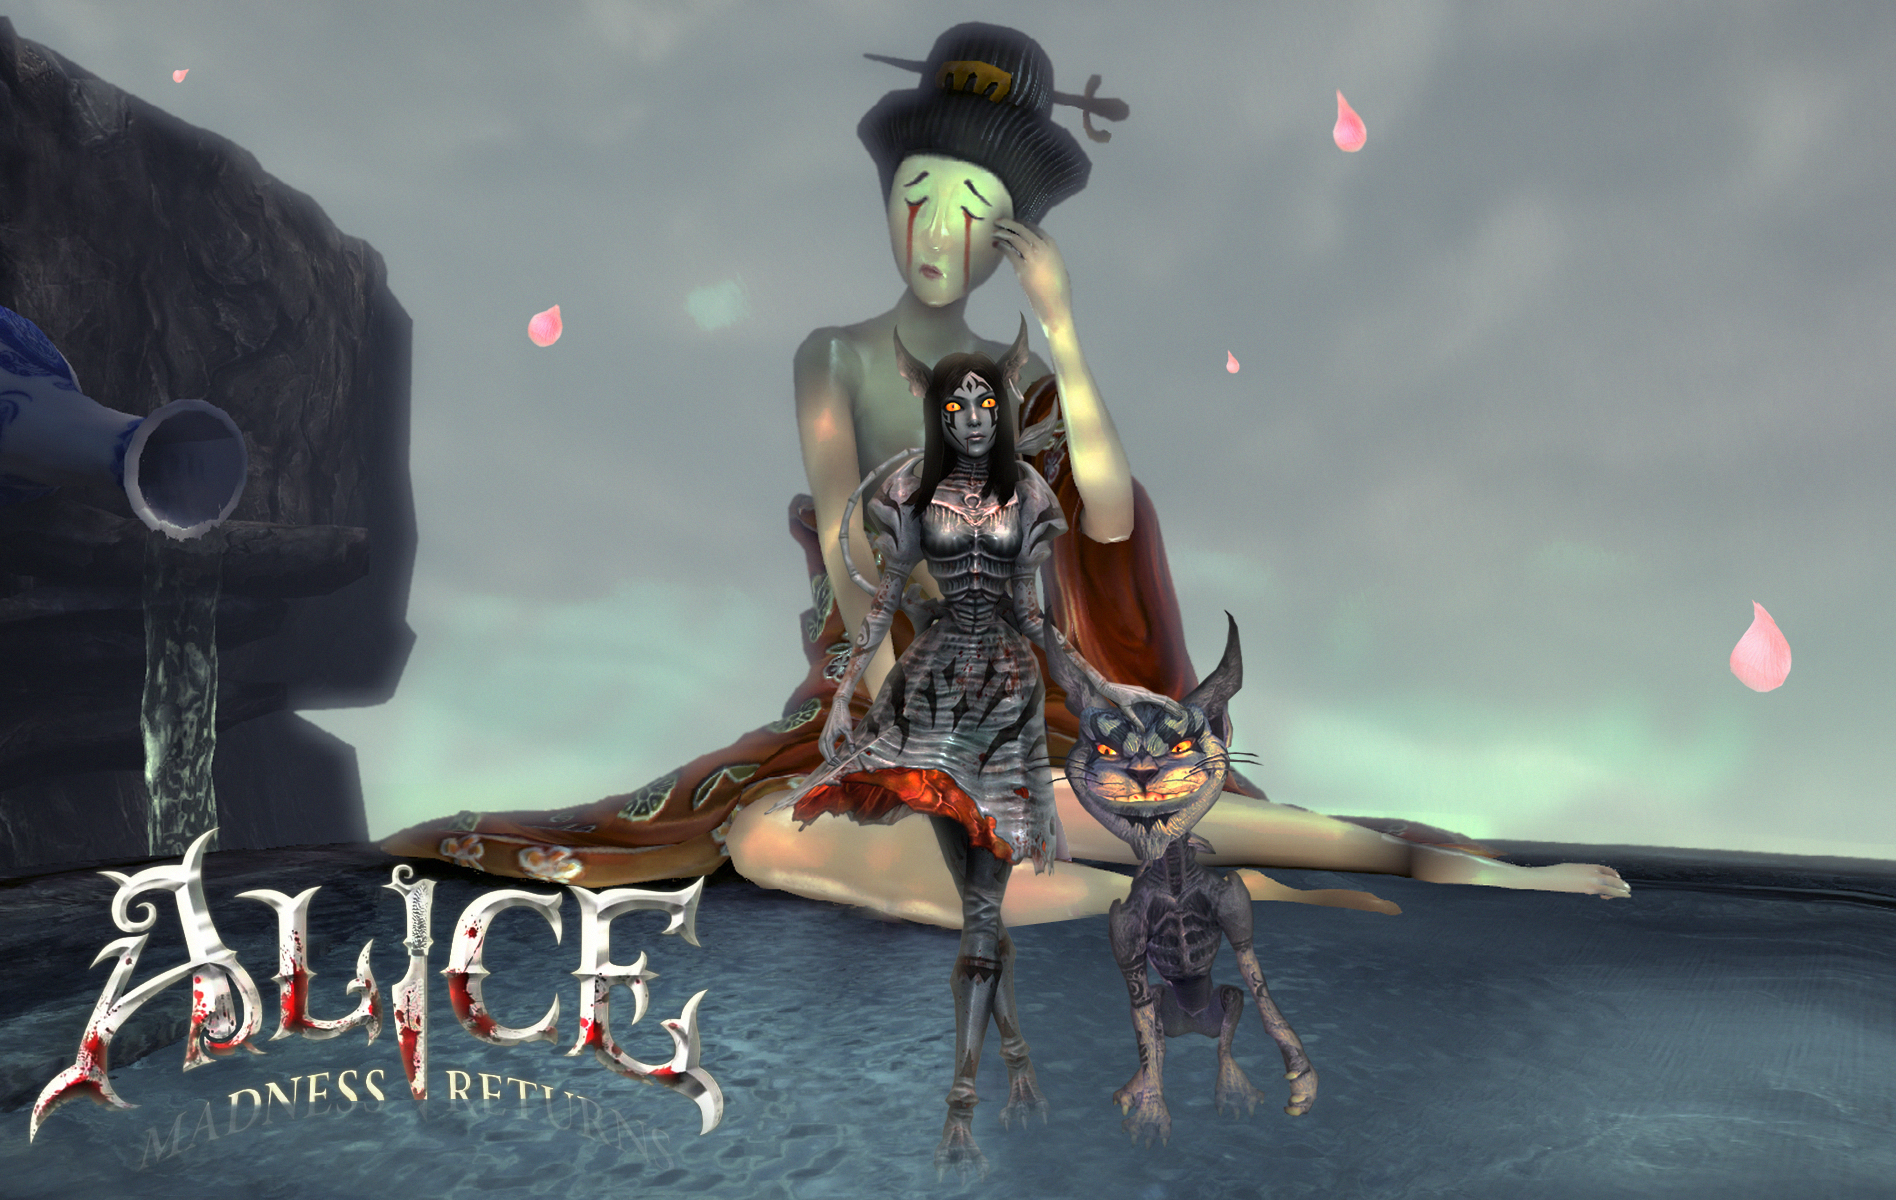 Render]Alice Madness Returns: Alice by DamnPotatoes on DeviantArt